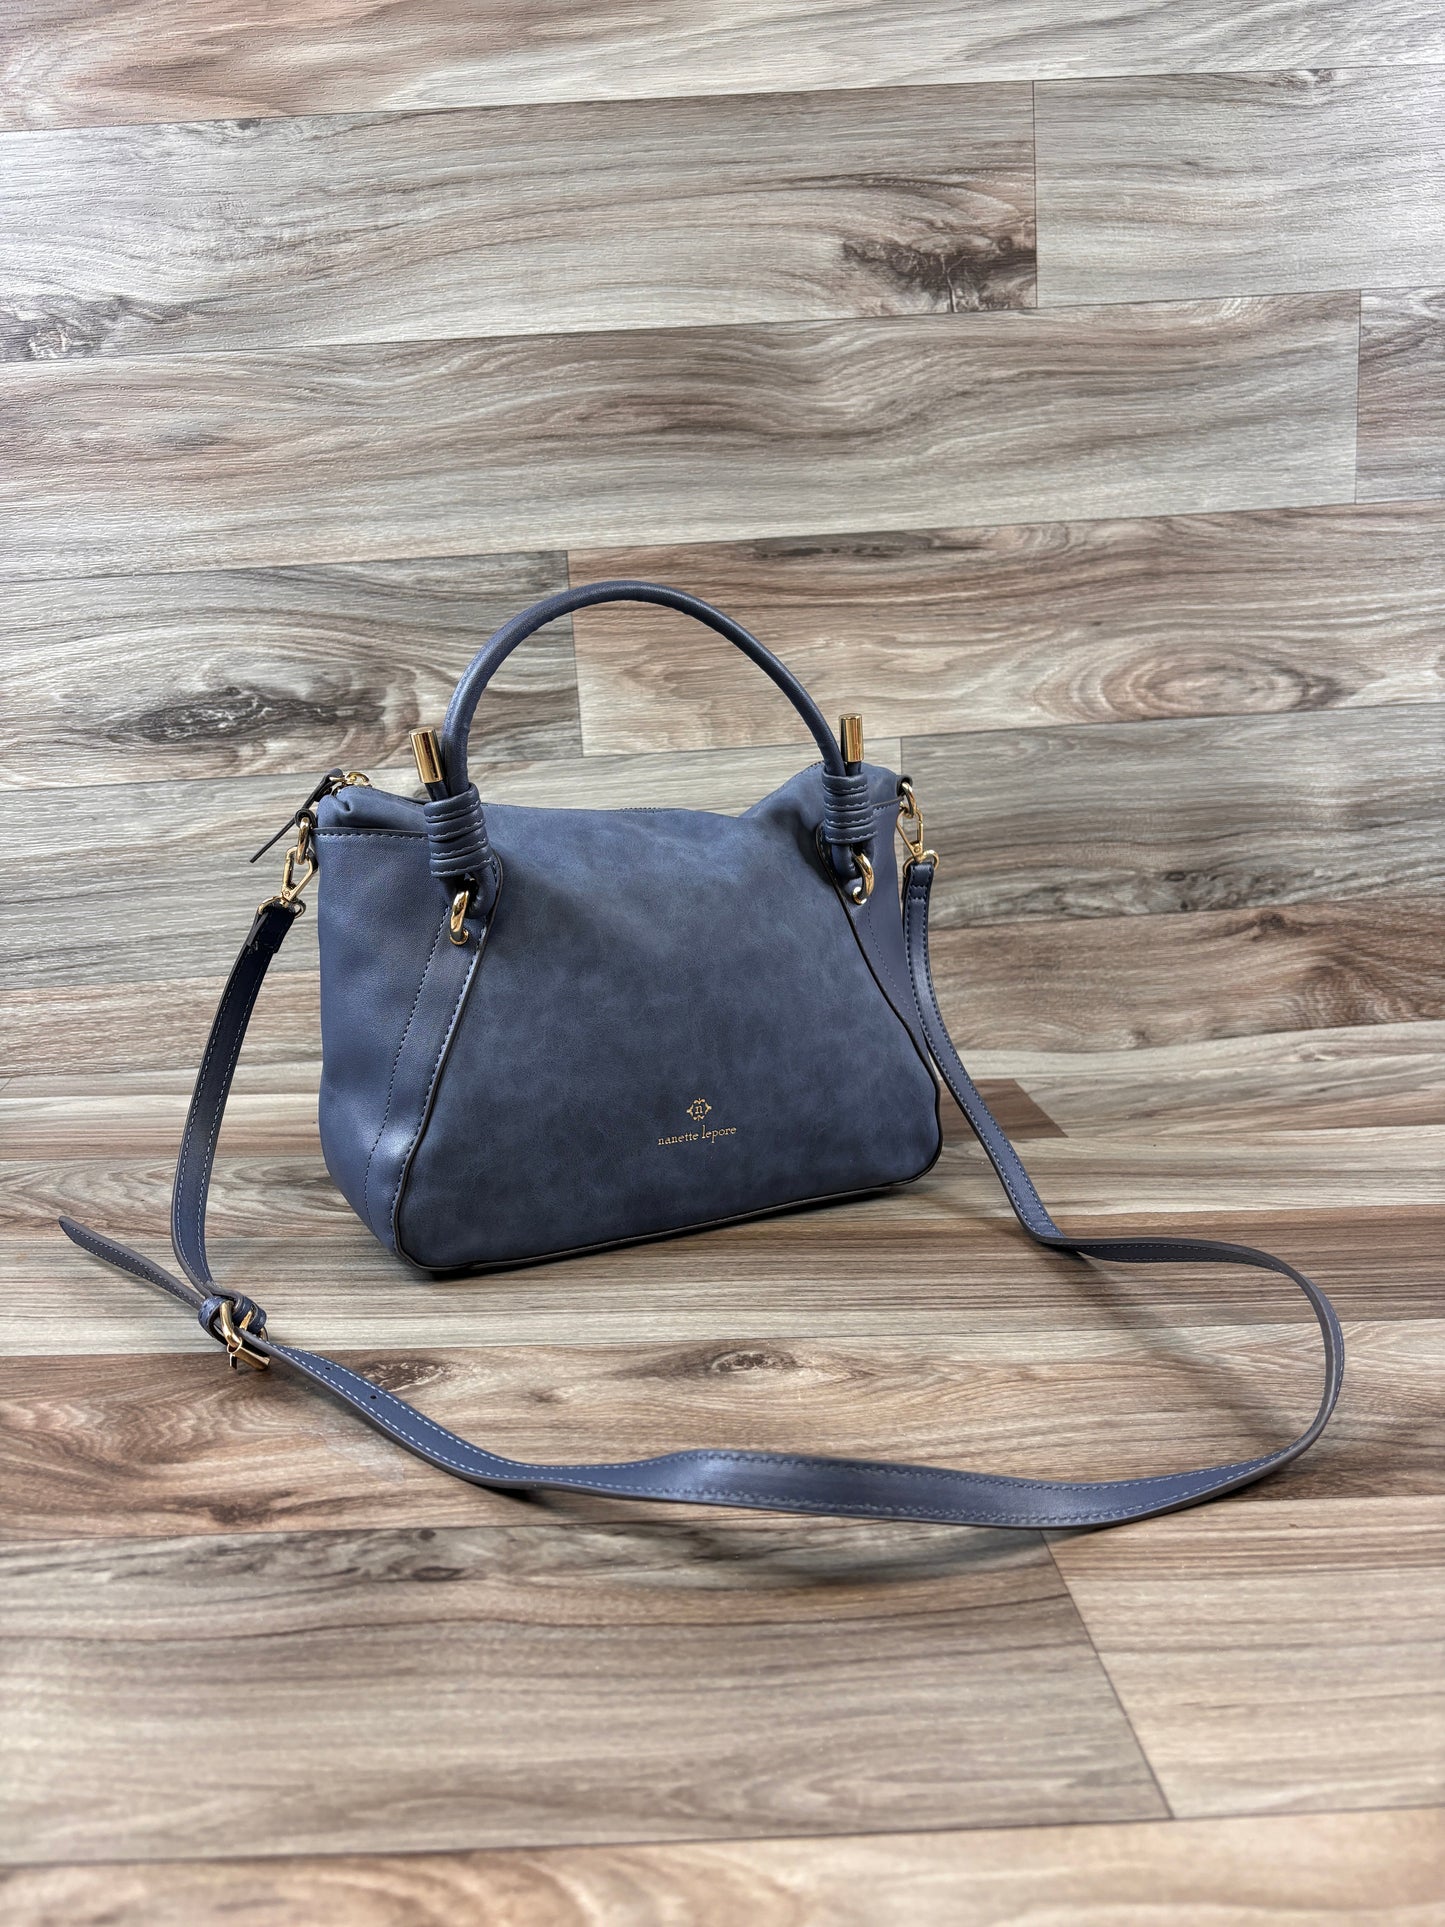 Handbag By Nanette By Nanette Lepore  Size: Medium